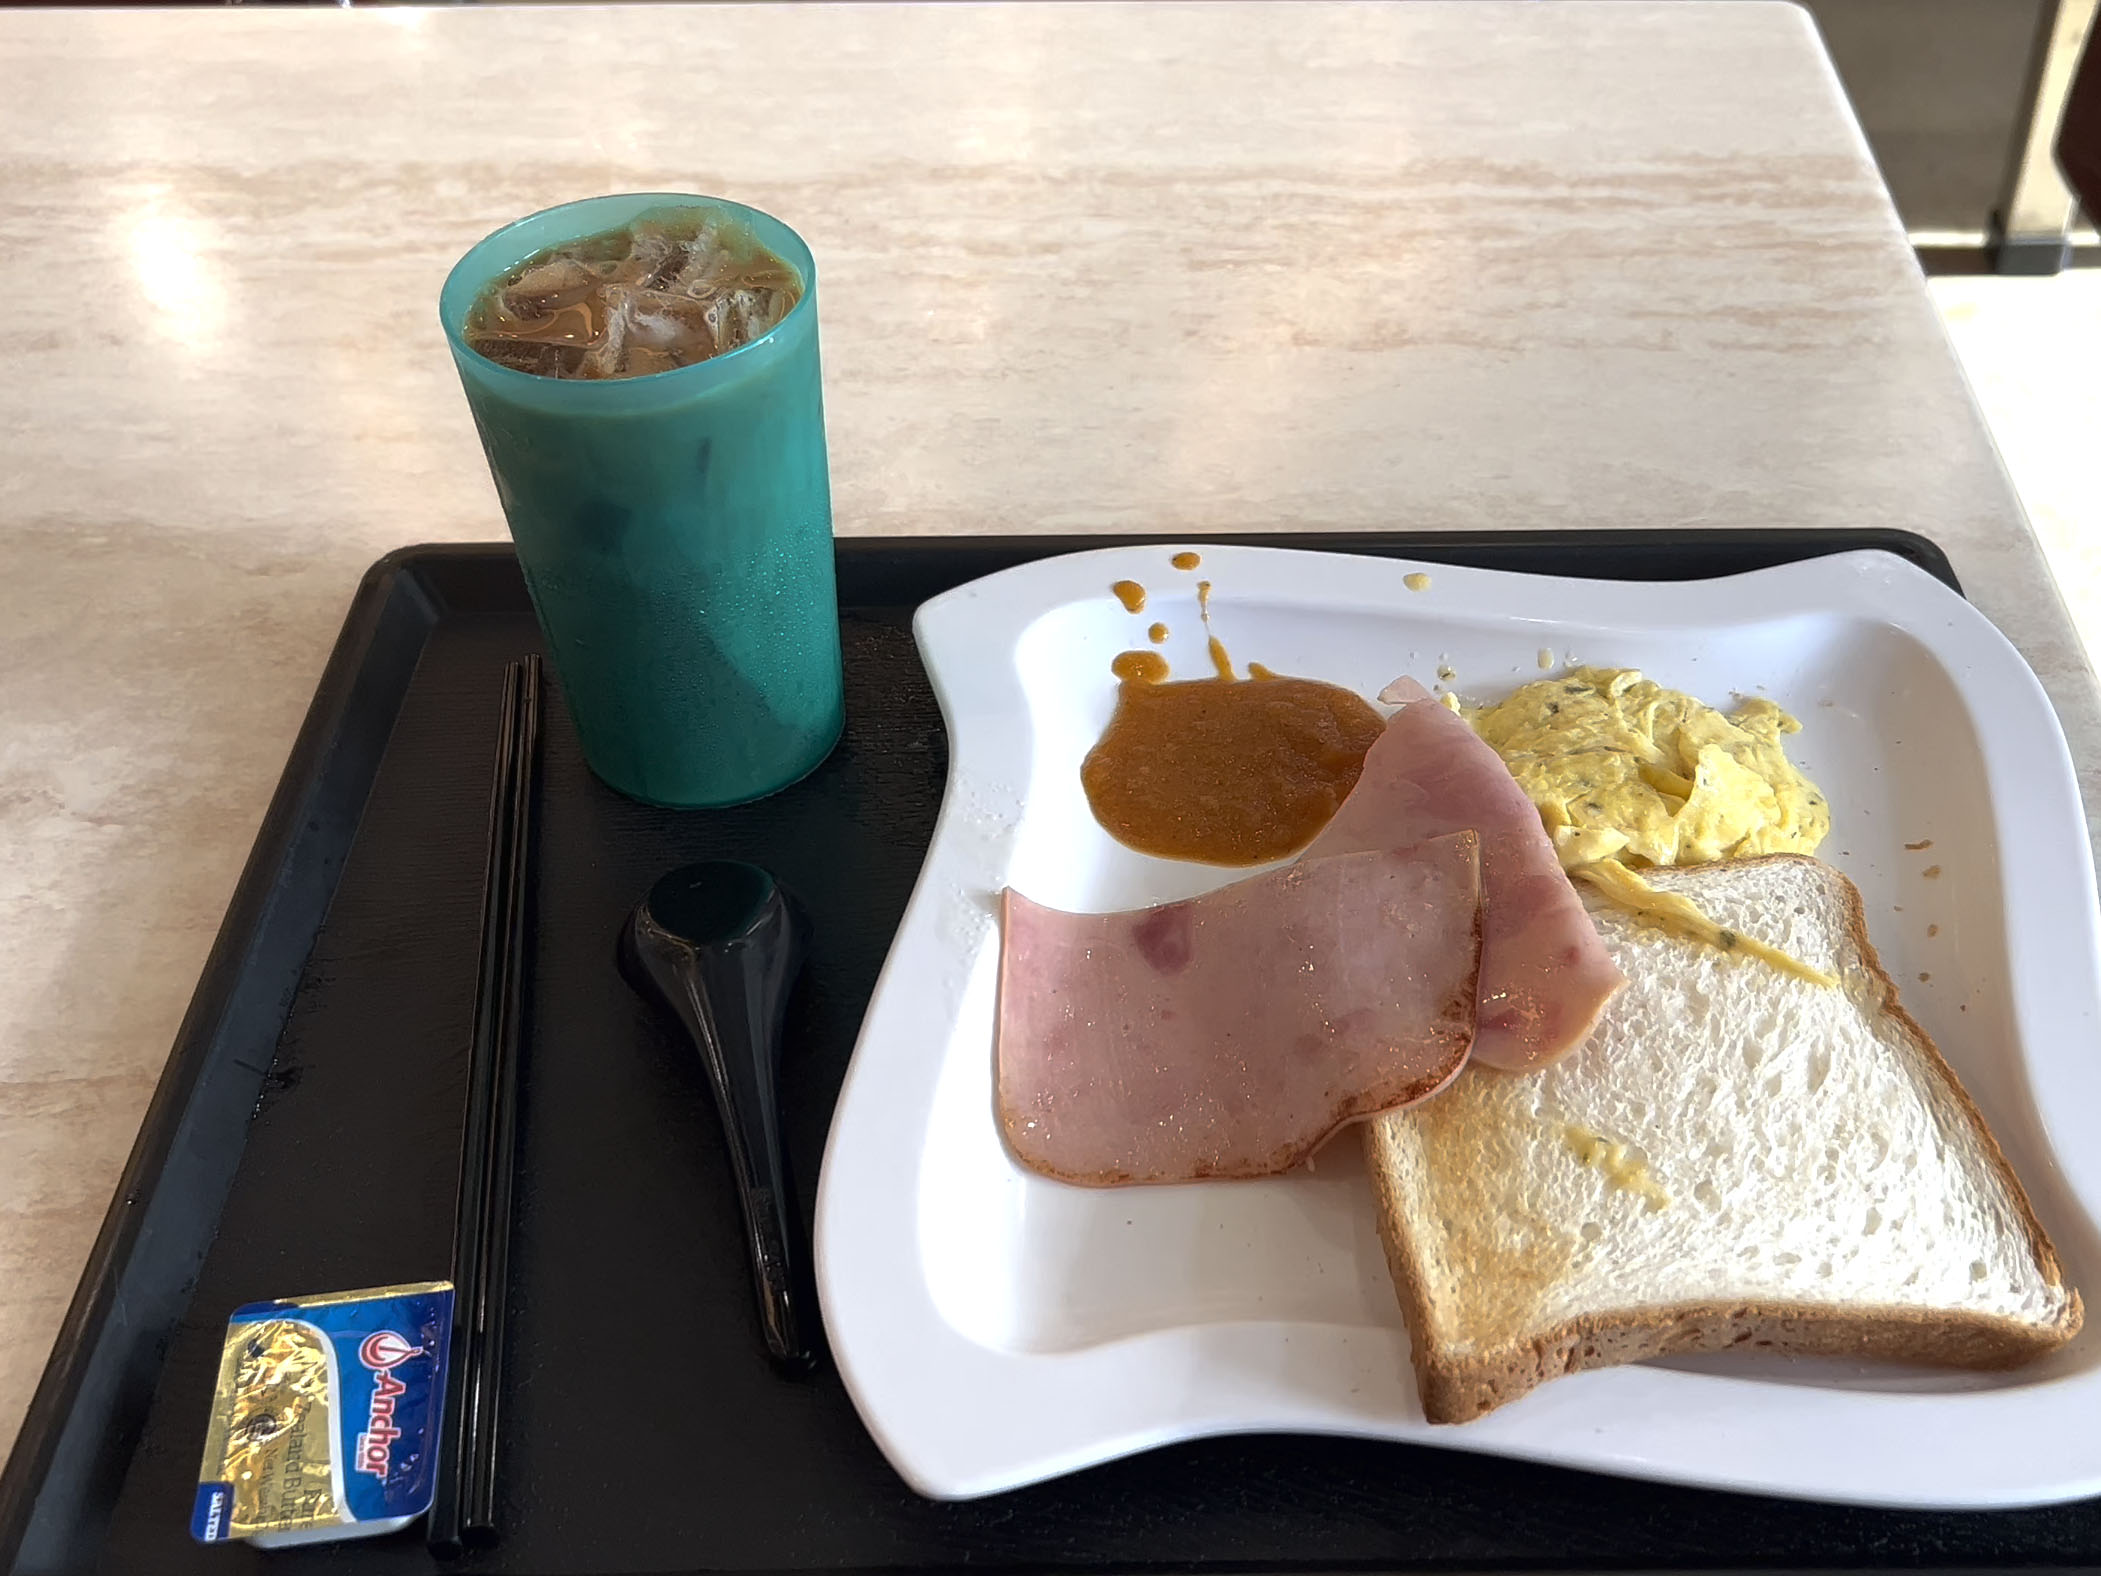 HKUST Breakfast at LG7